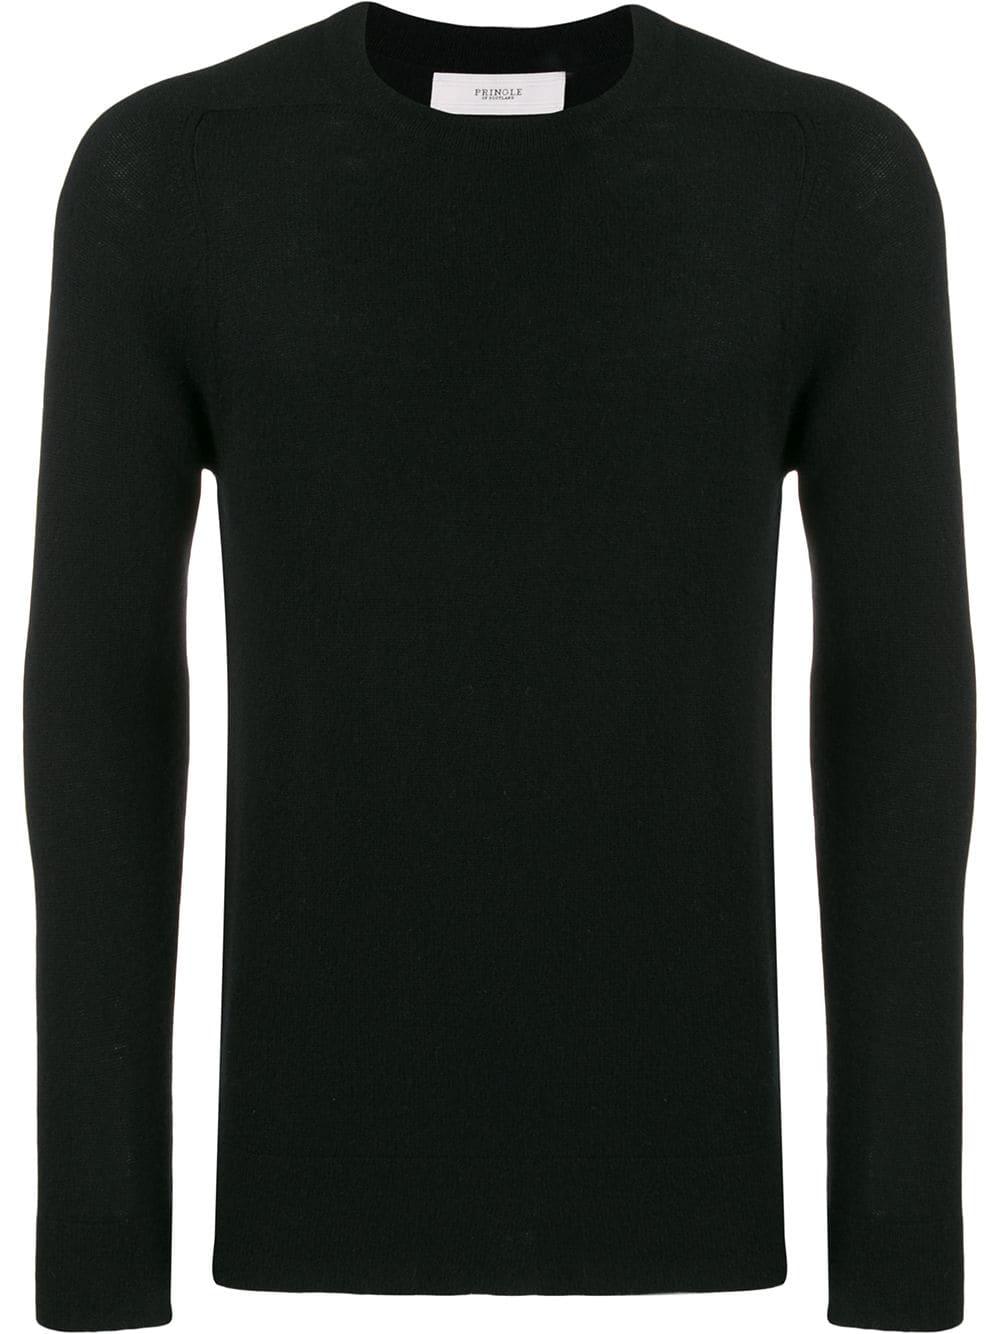 Pringle of Scotland Off-gauge Cashmere Sweater in Black for Men - Lyst